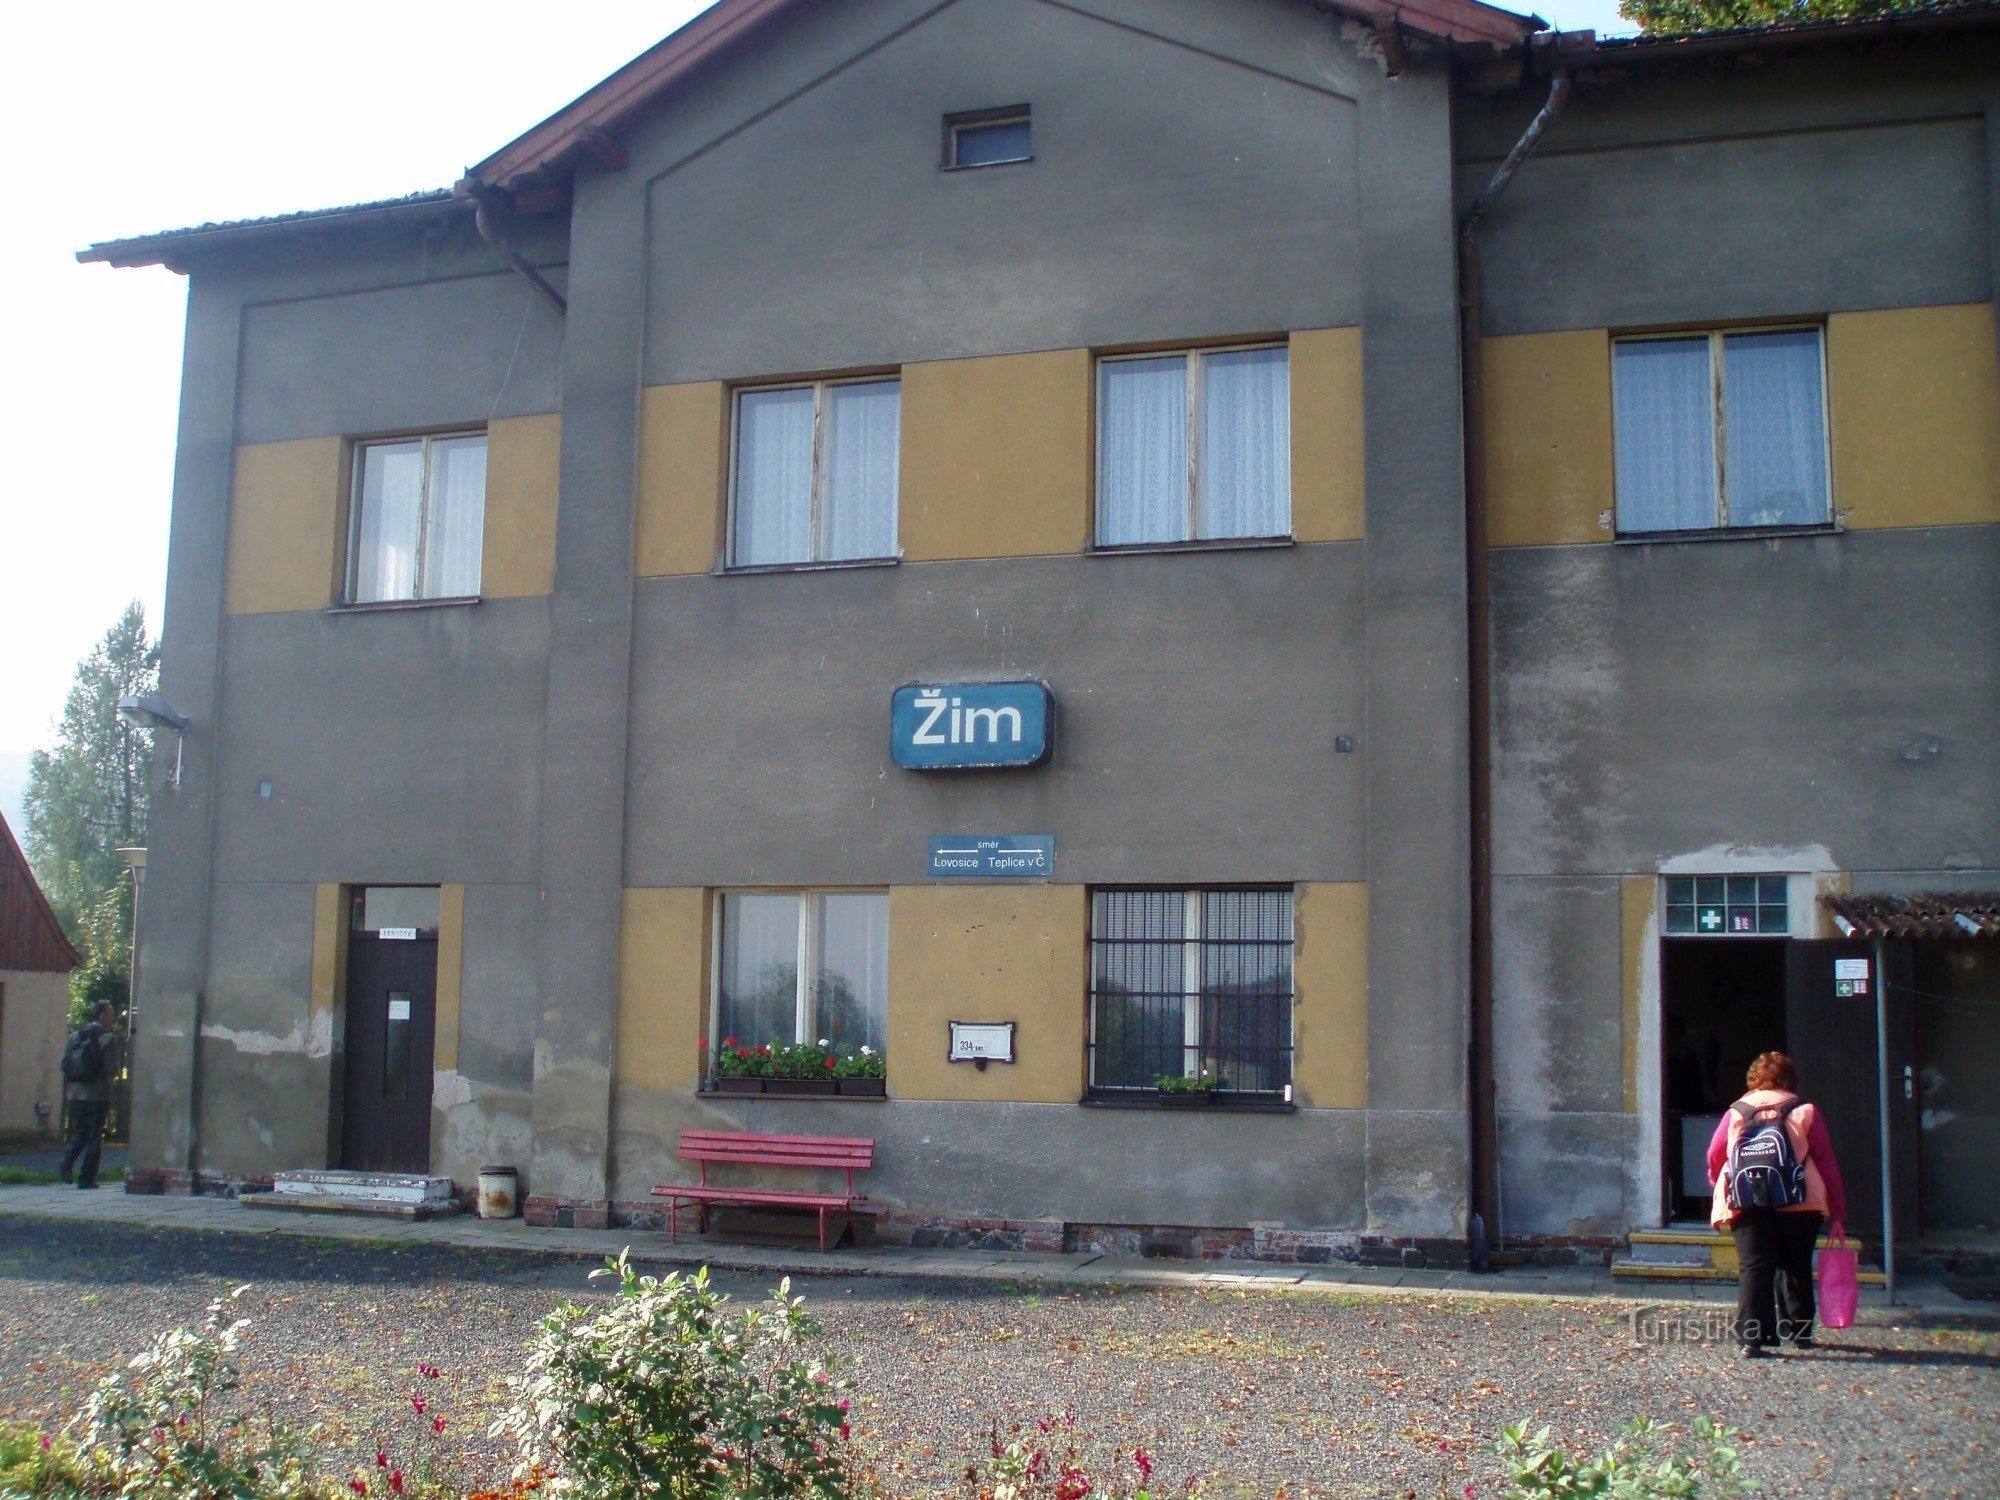 Žim station